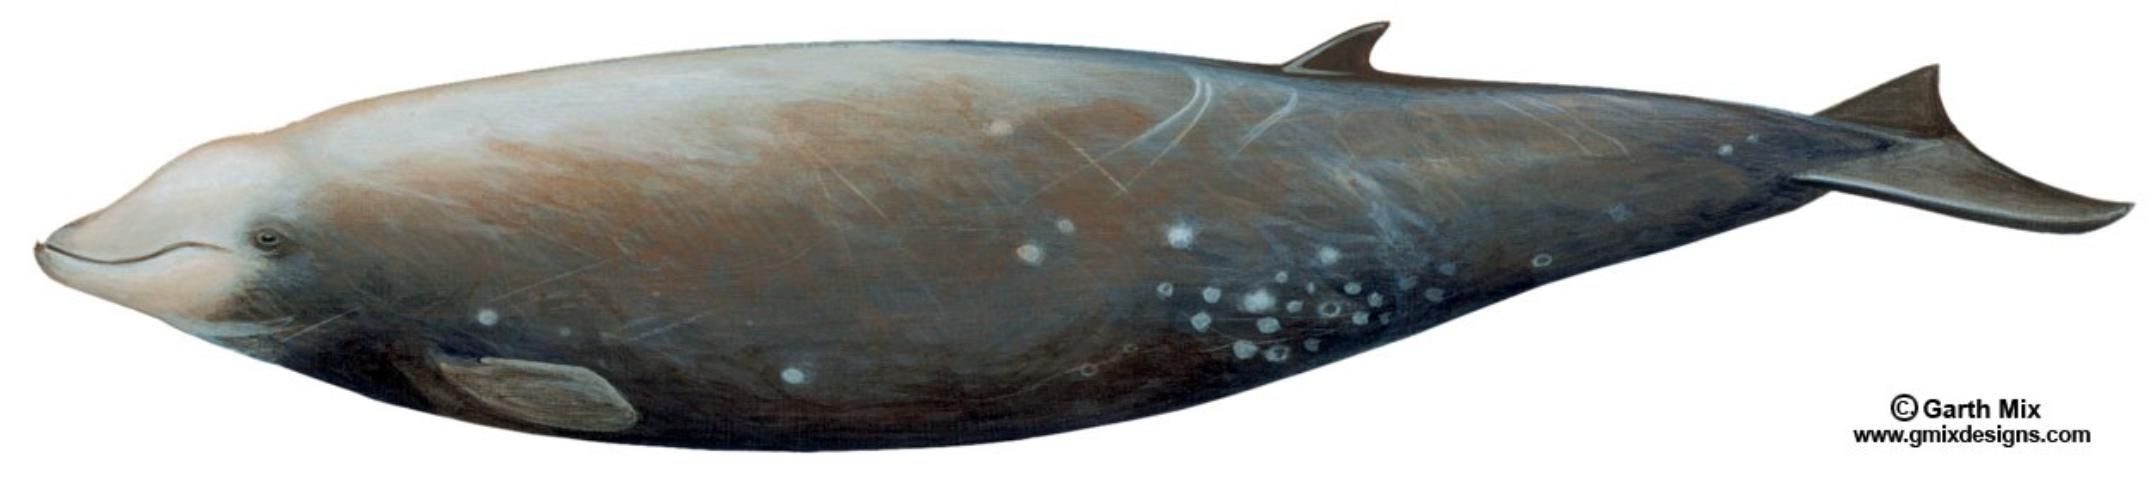 Figure 29. Cuvier's beaked whale.